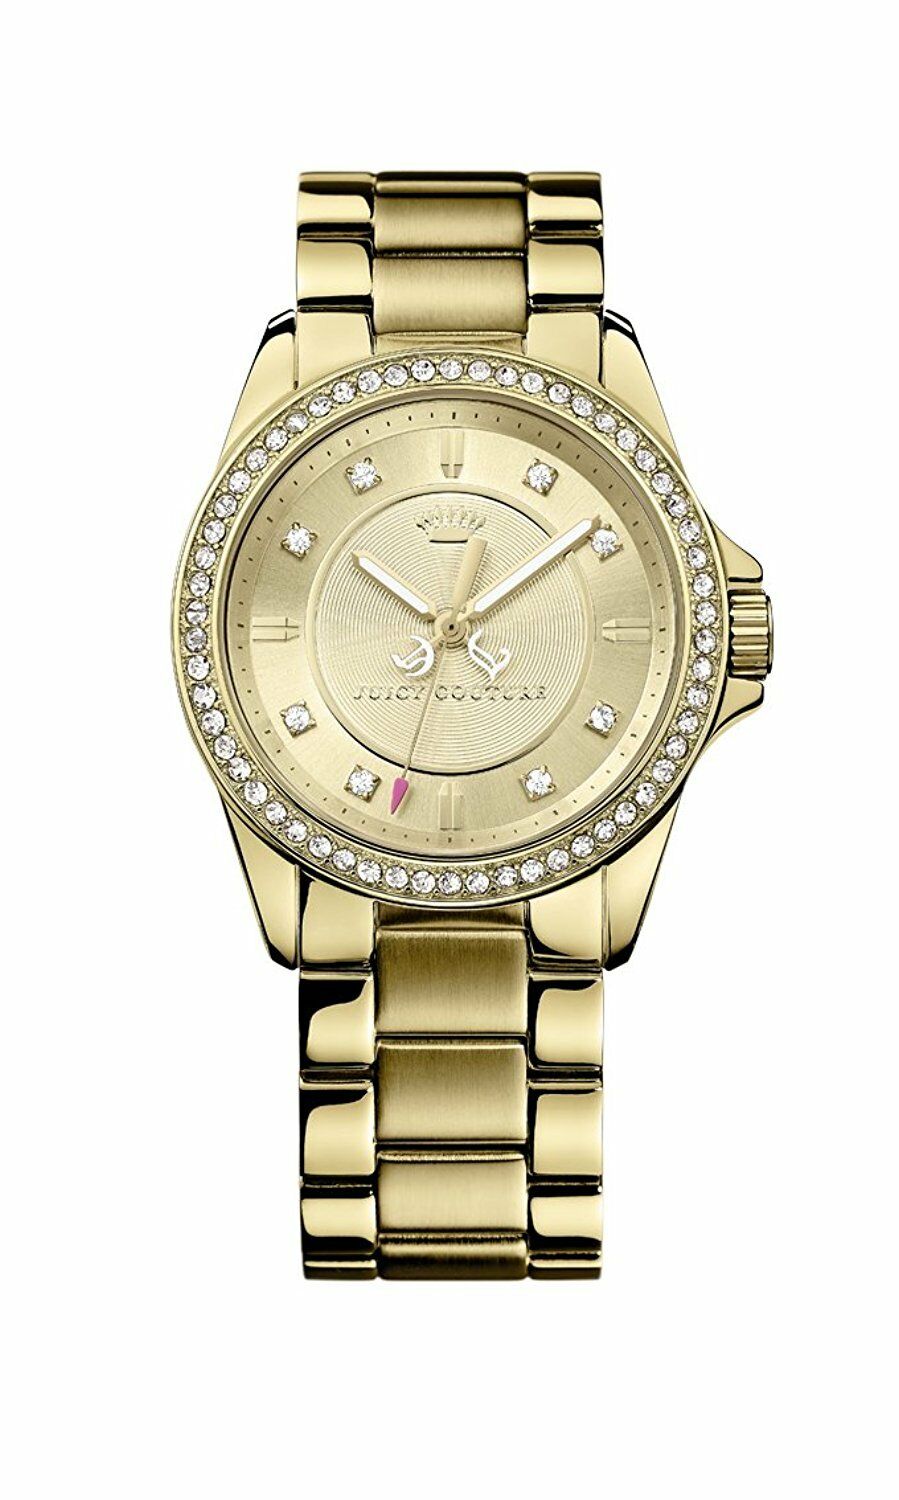 Juicy Couture Watches | Juicy Watches | WatchShop.com™